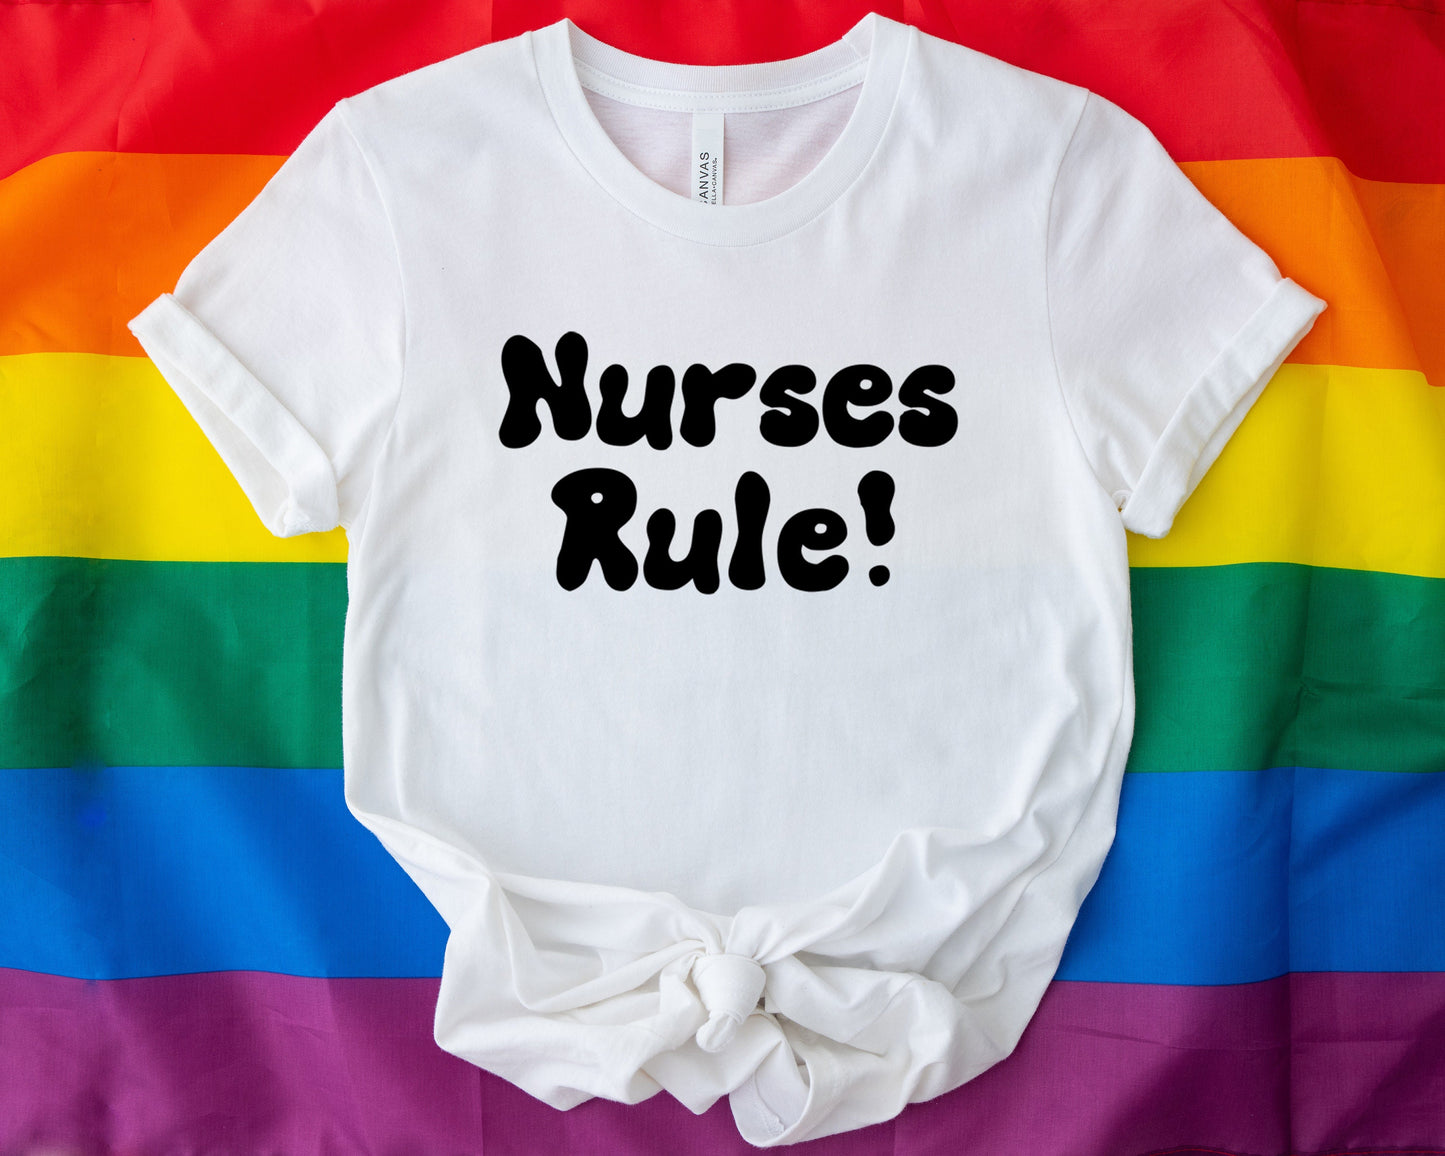 Nurses Rule Shirt, I love nurses shirt, Awesome gift shirt for nurses, gift shirt for a special nurse, Thank you gift shirt for nurses